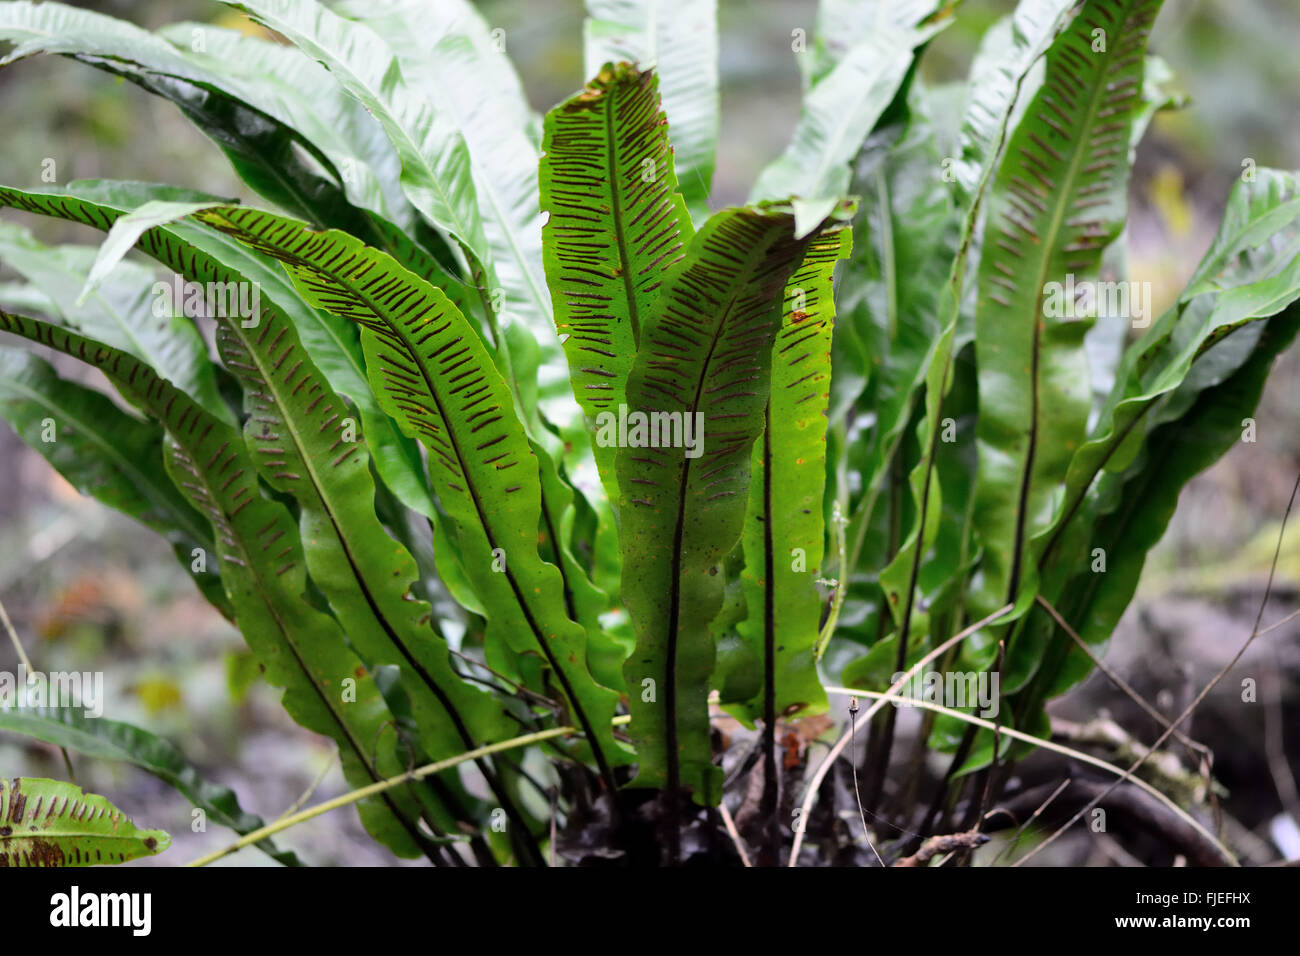 Hart's-tongue fern (Asplenium scolopendrium). Underside of simple, undivided fronds of fern showing sori and sporangia Stock Photo